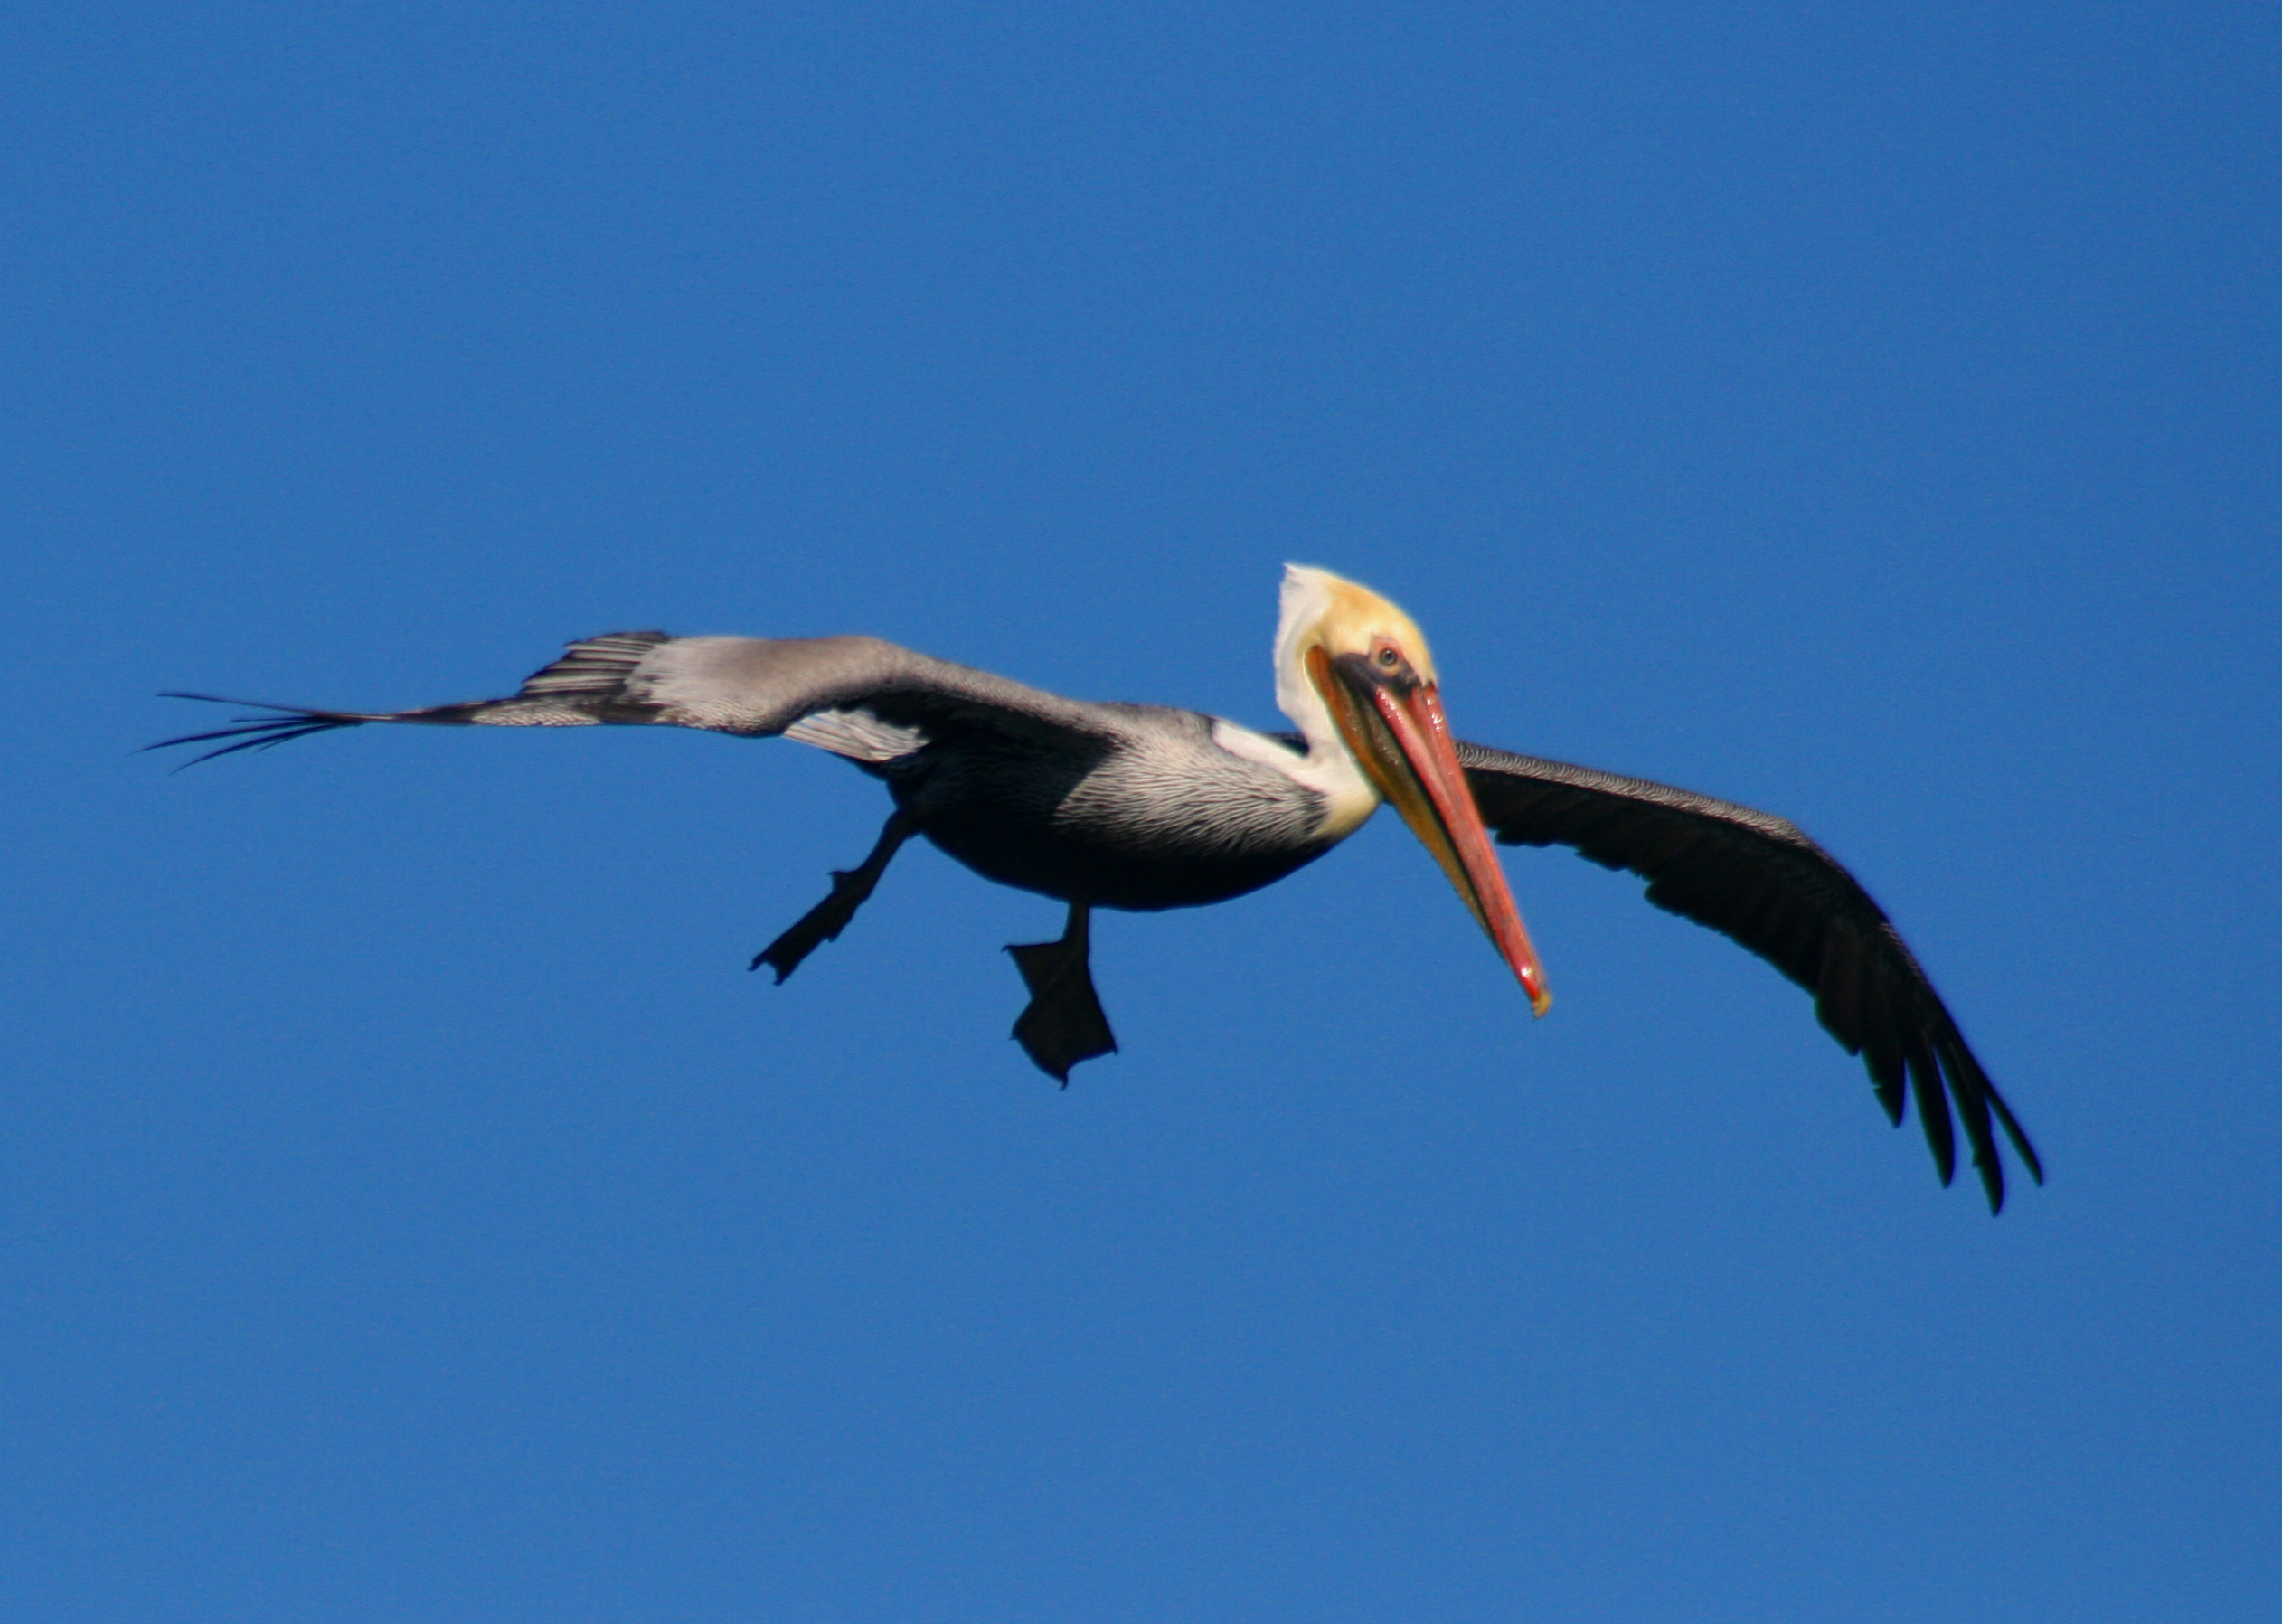 File:Flying Brown Pelican 2.jpg - Wikimedia Commons